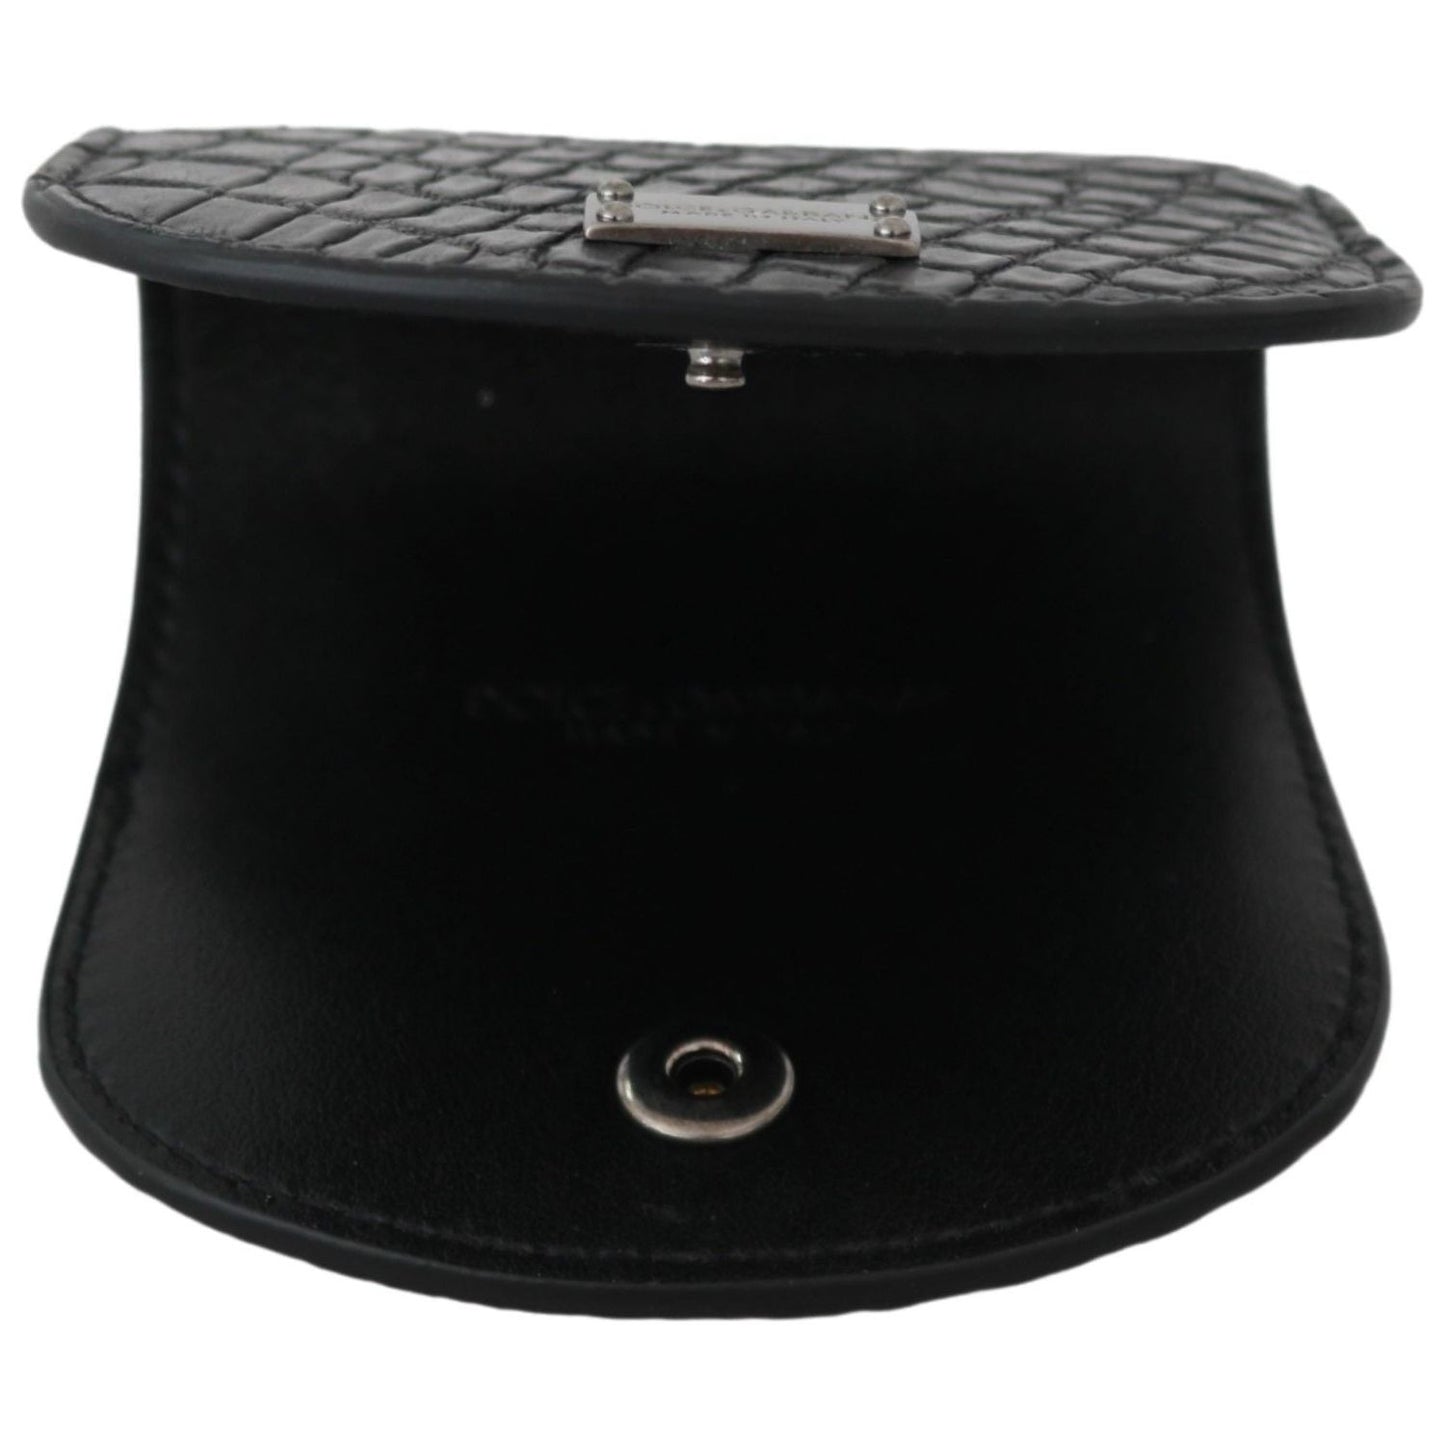 Dolce & Gabbana Sleek Black Leather Coin Case Wallet Condom Case black-exotic-skin-pocket-condom-case-holder IMG_0233-402a91b6-d29.jpg